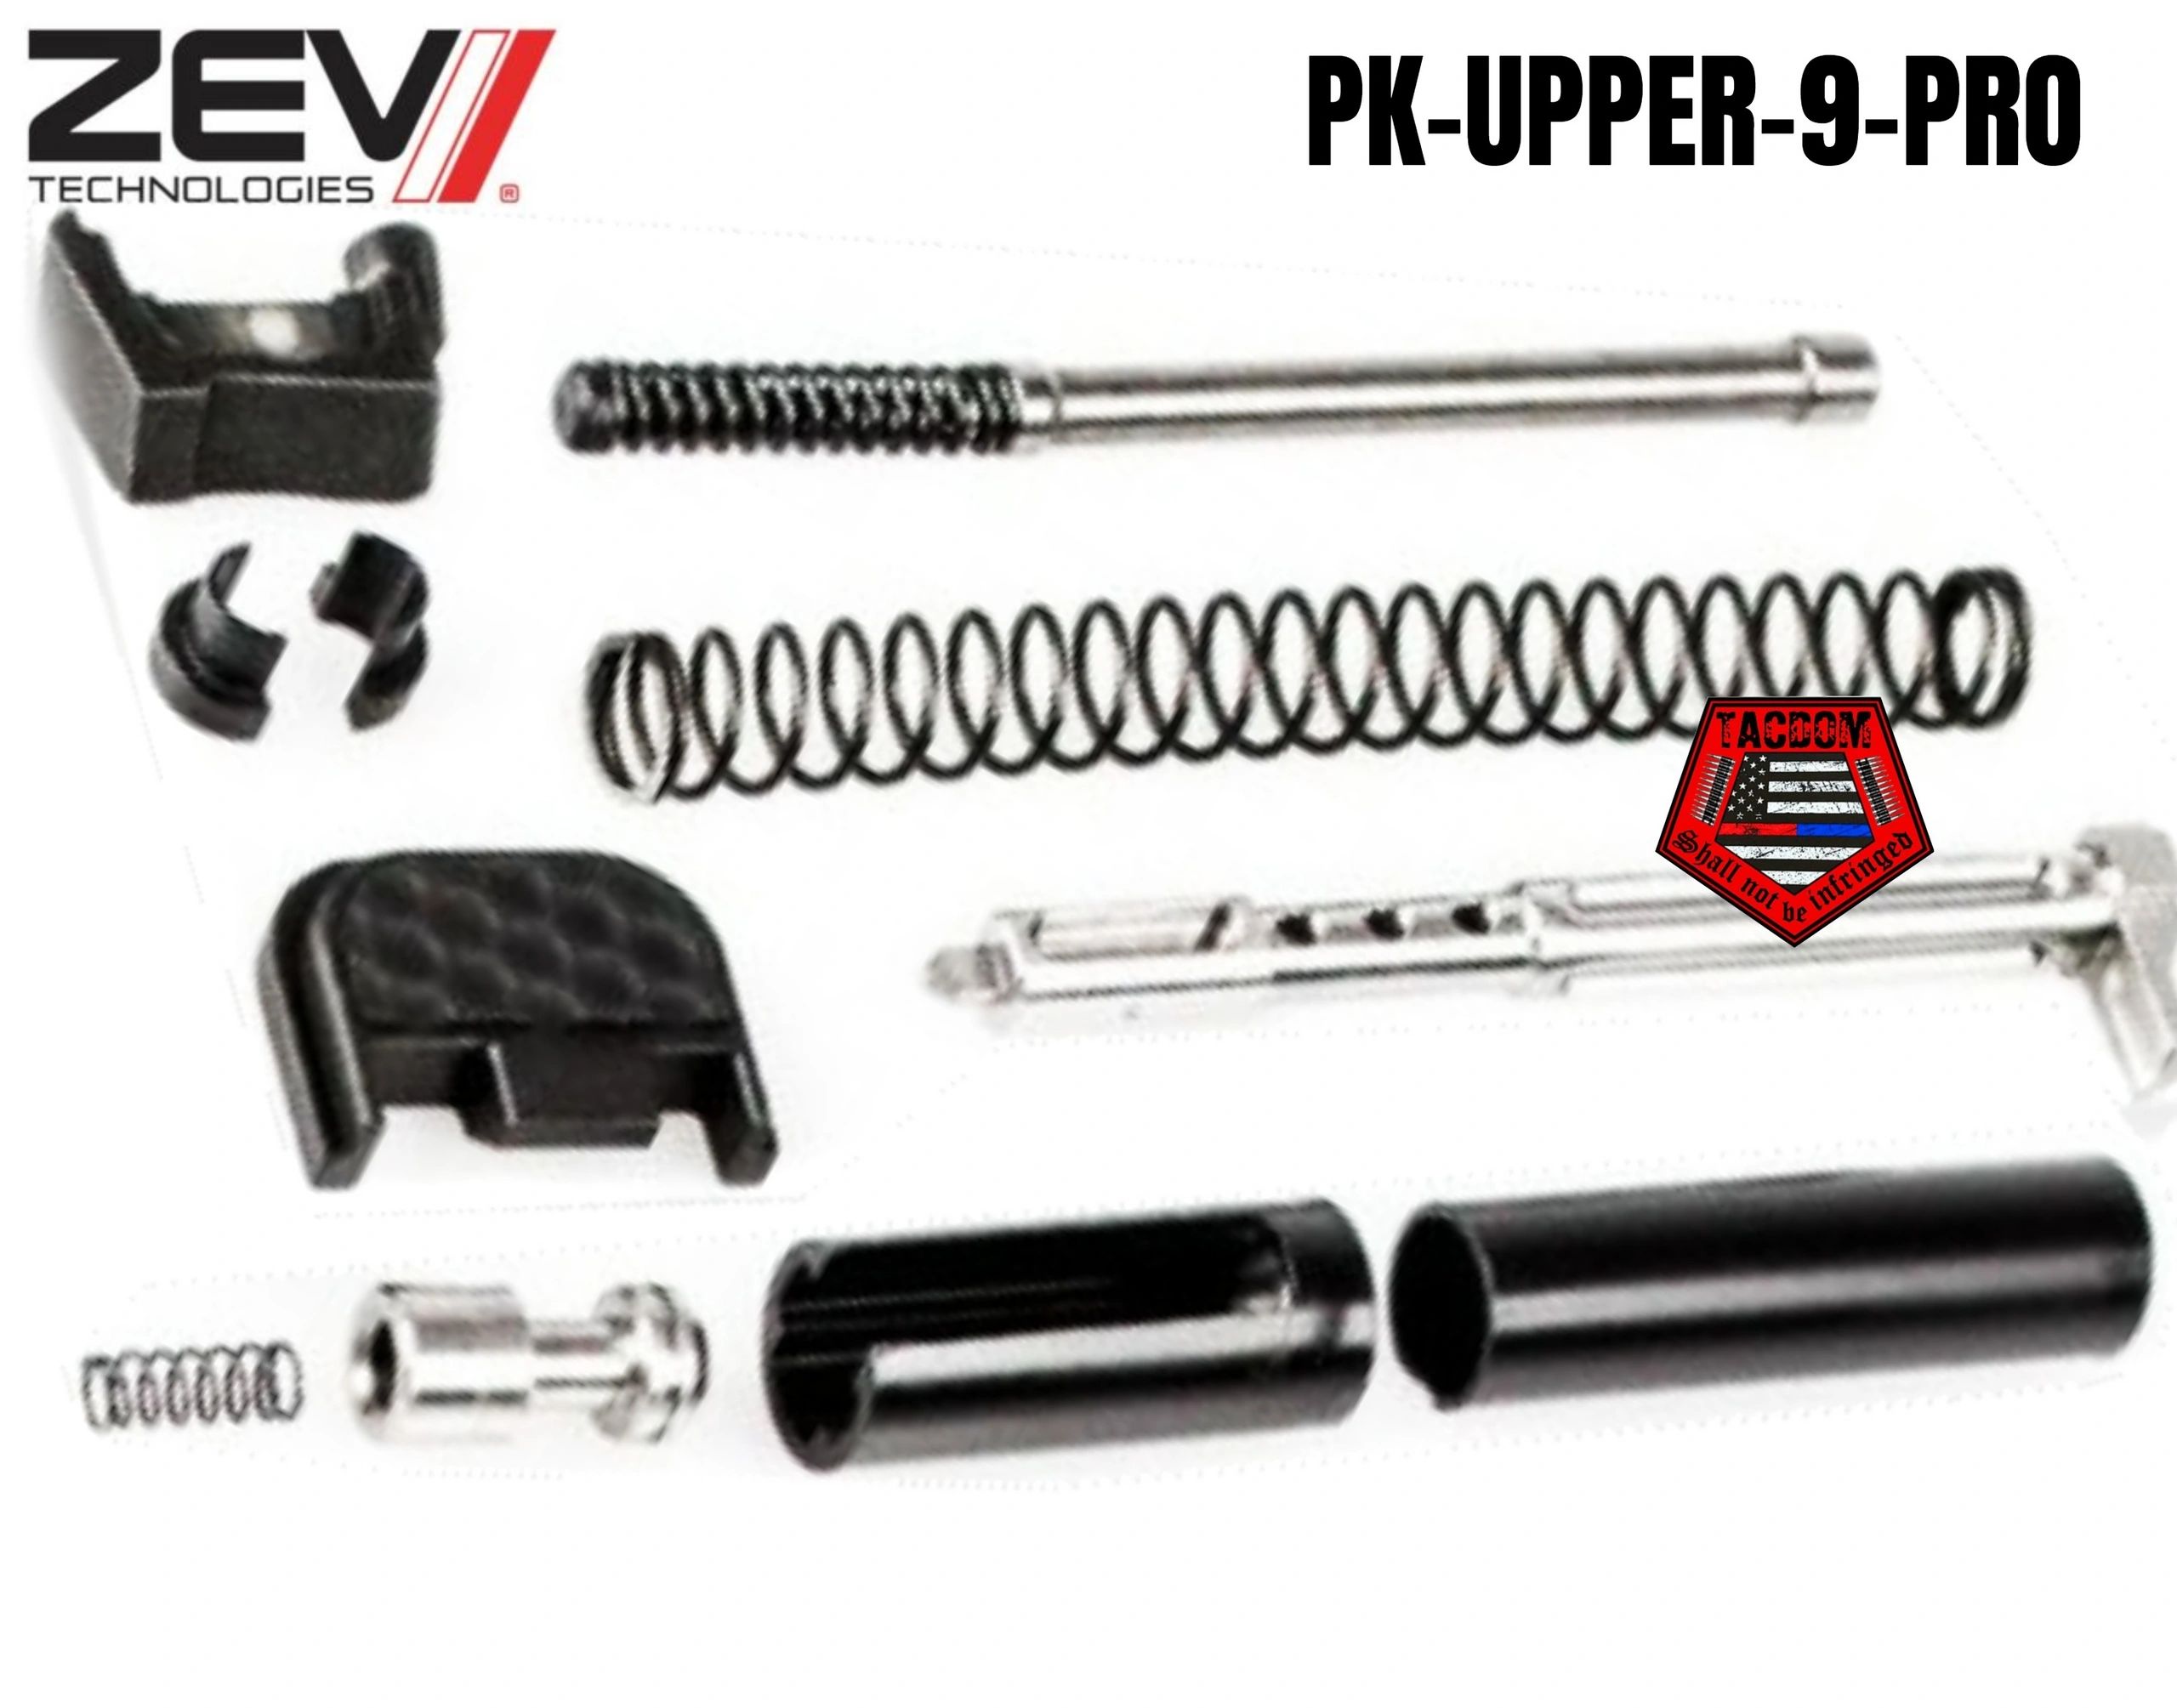 Zev Technologies Glock Upper Slide Parts Kit Pro 9mm Pk Upper 9 Pro 17